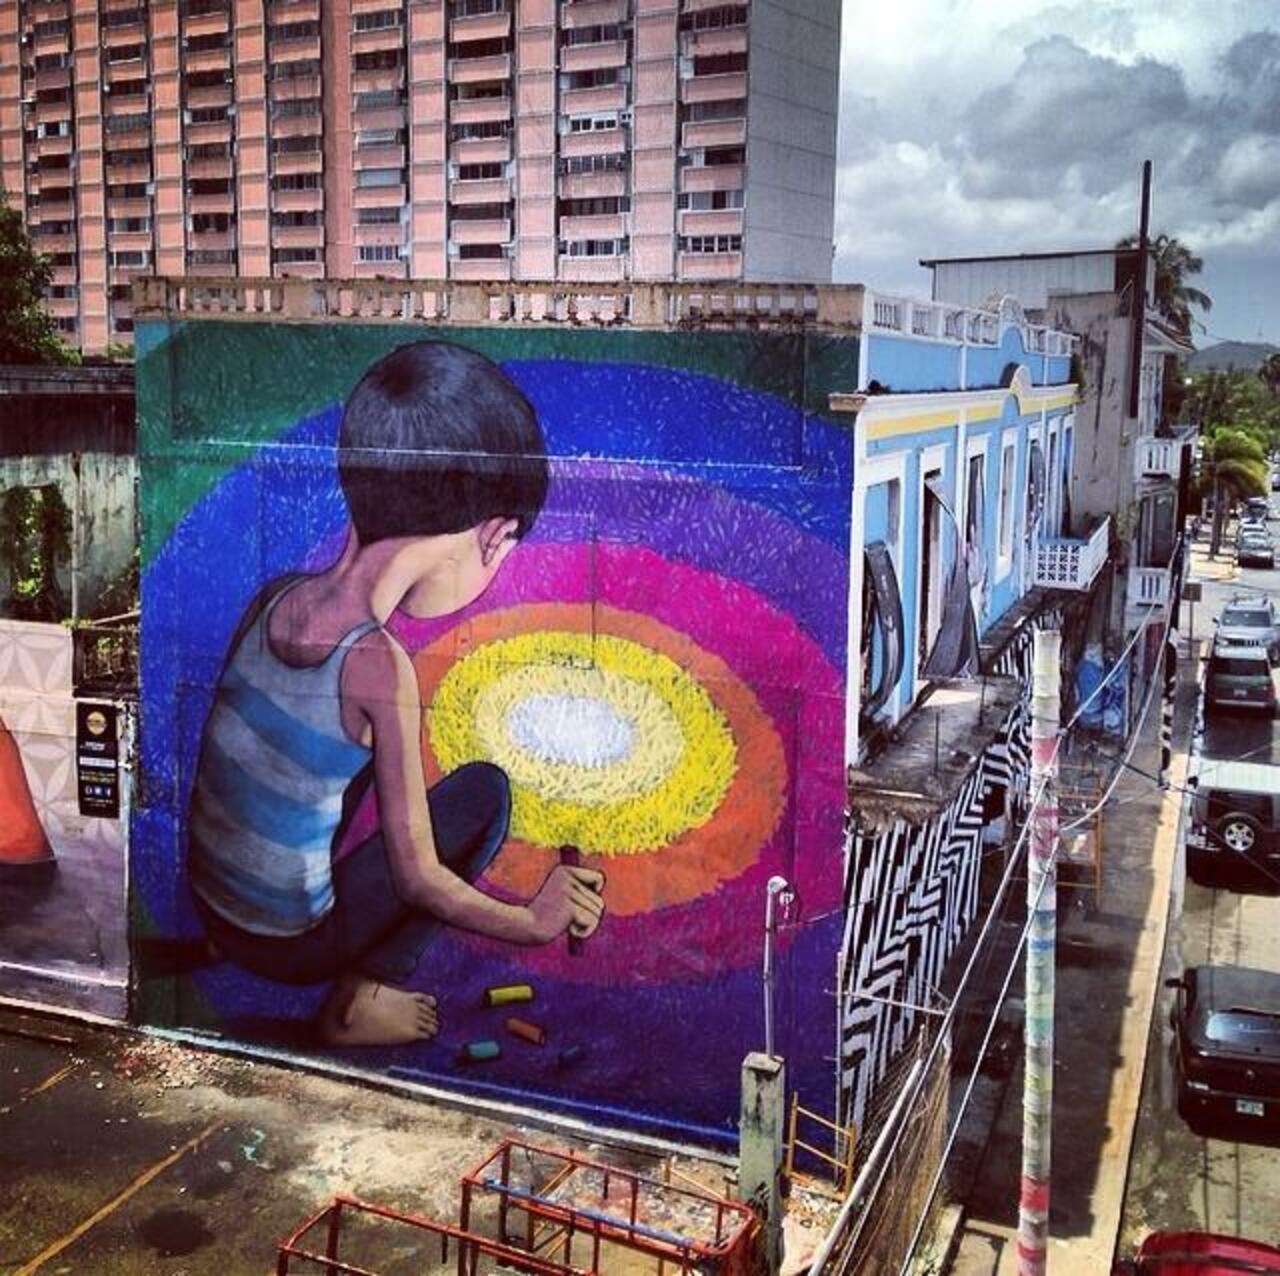 RT @designopinion: Artist Seth Globepainter new large scale Street Art mural in Puerto Rico #art #mural #graffiti #streetart http://t.co/XvszpiNOqr